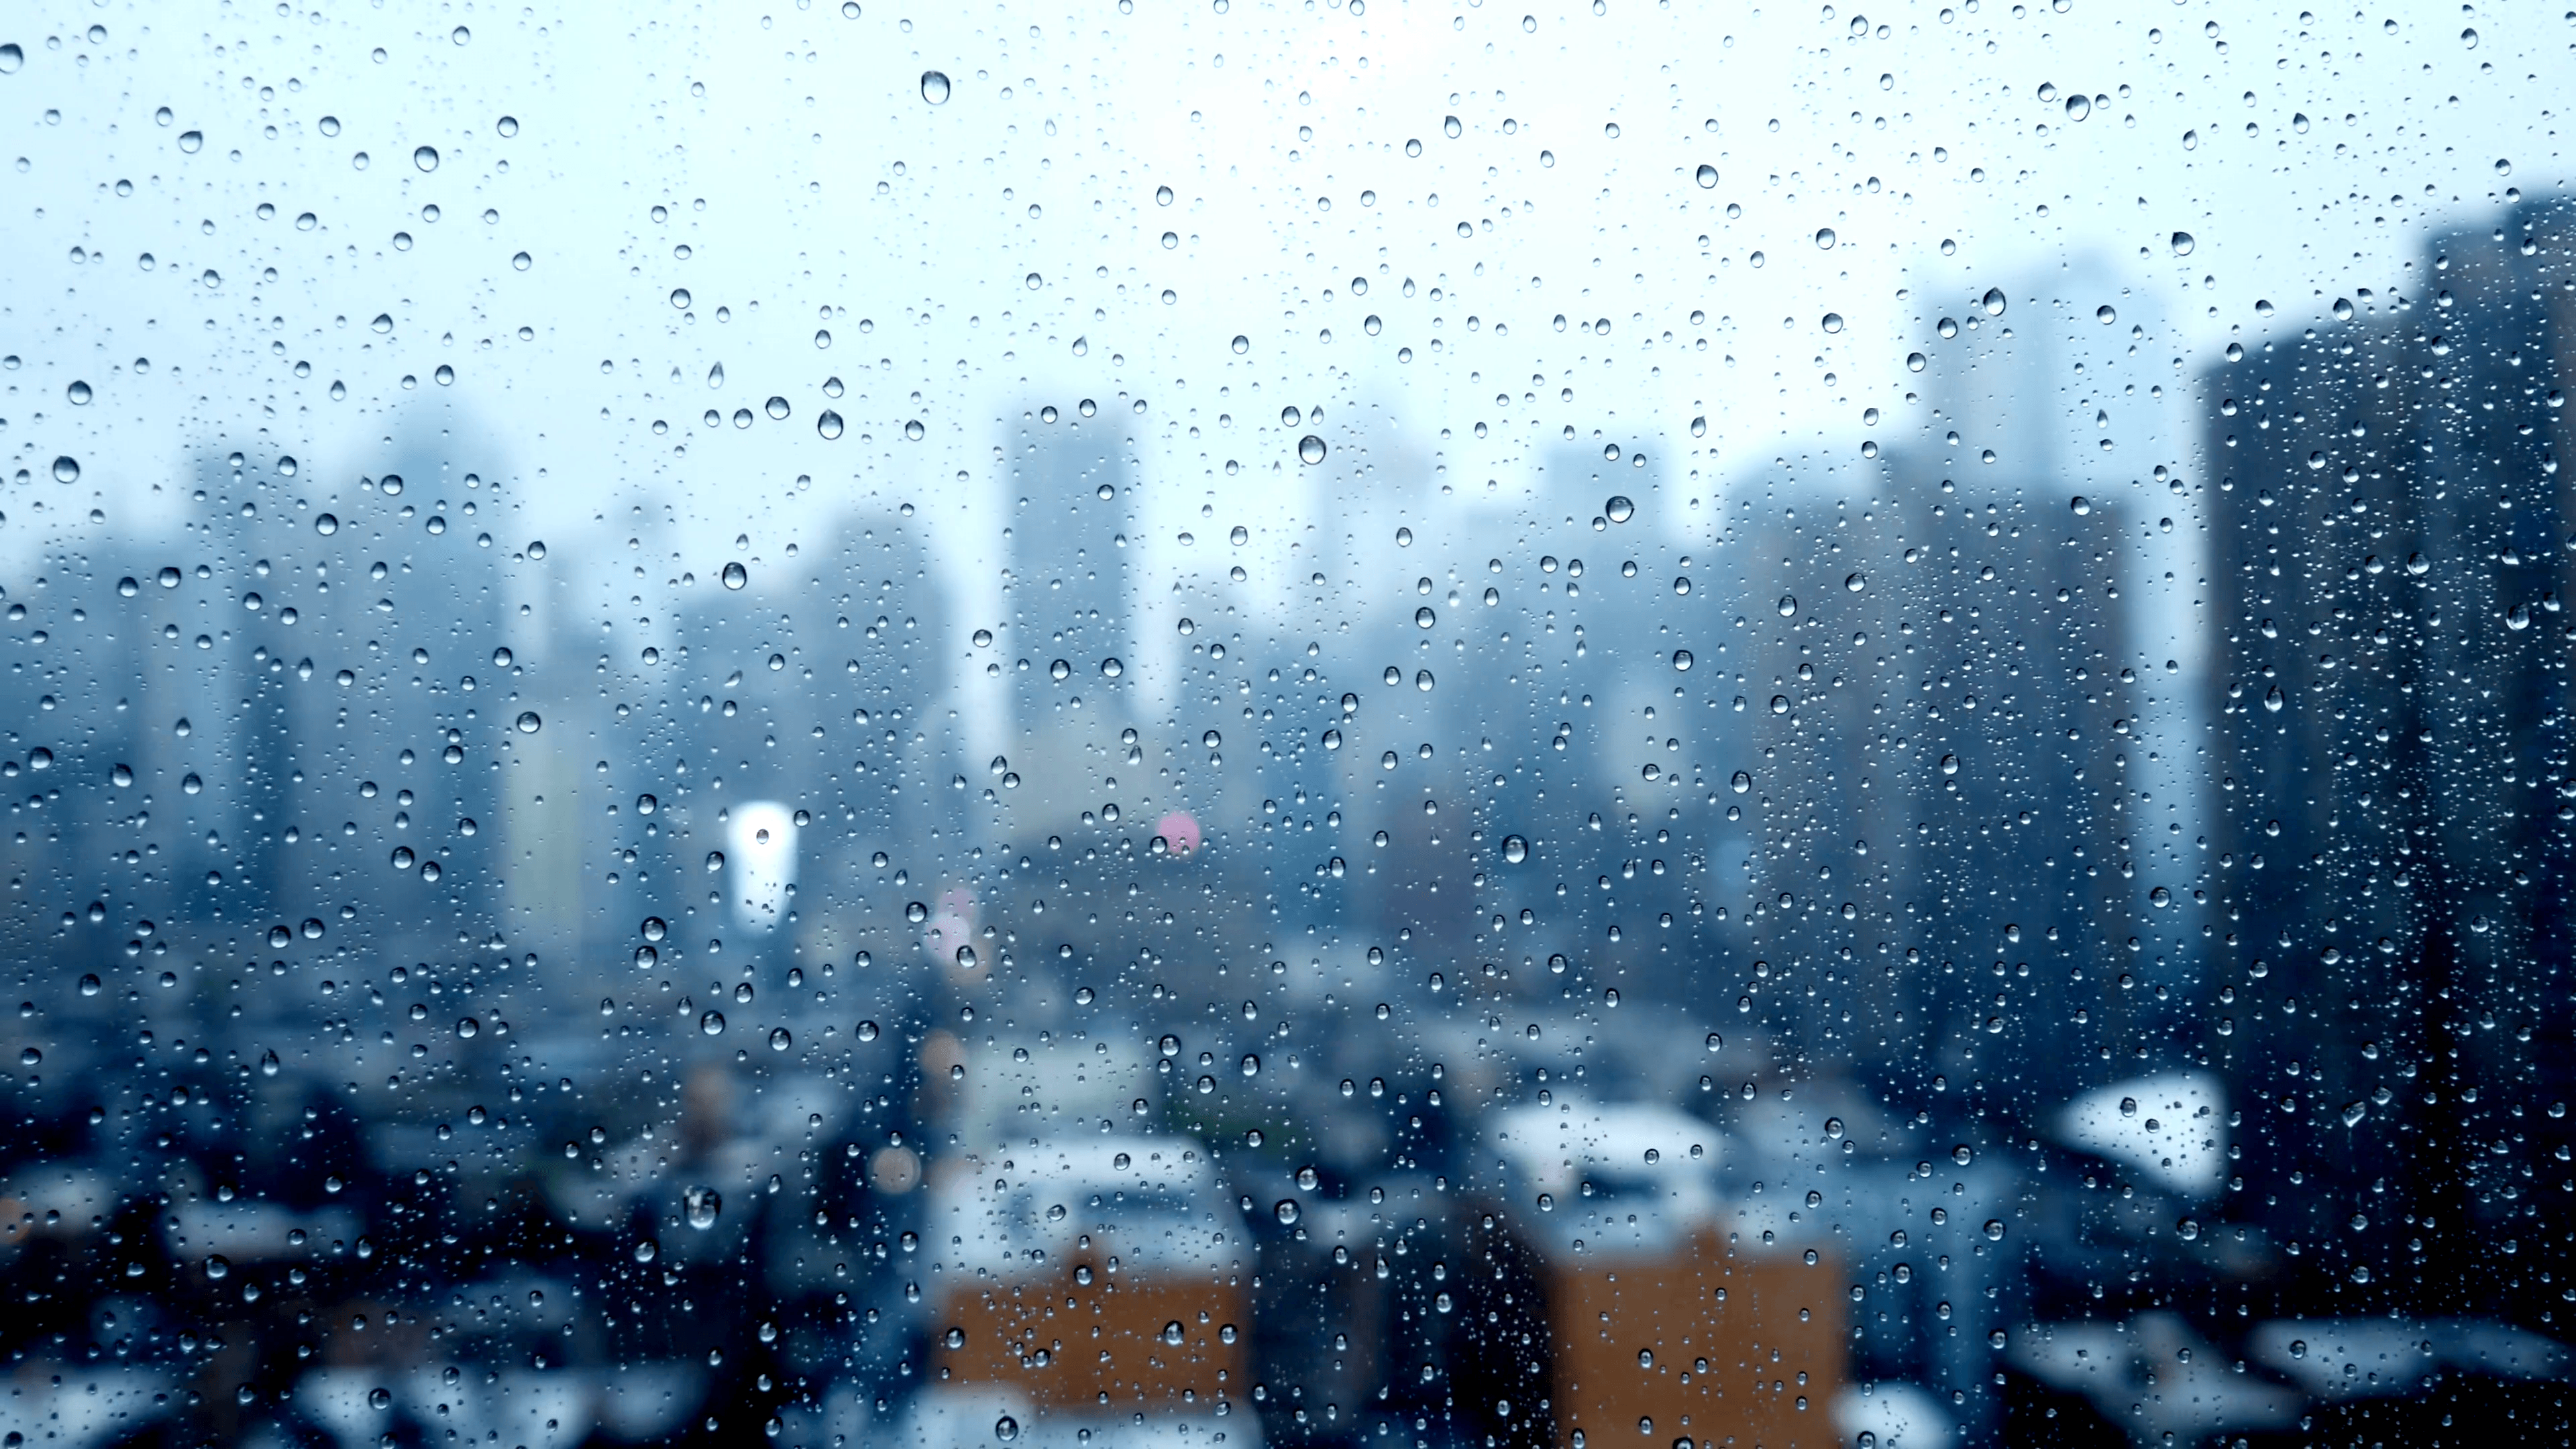 city skyline background on a rainy wet weather day. sad mood